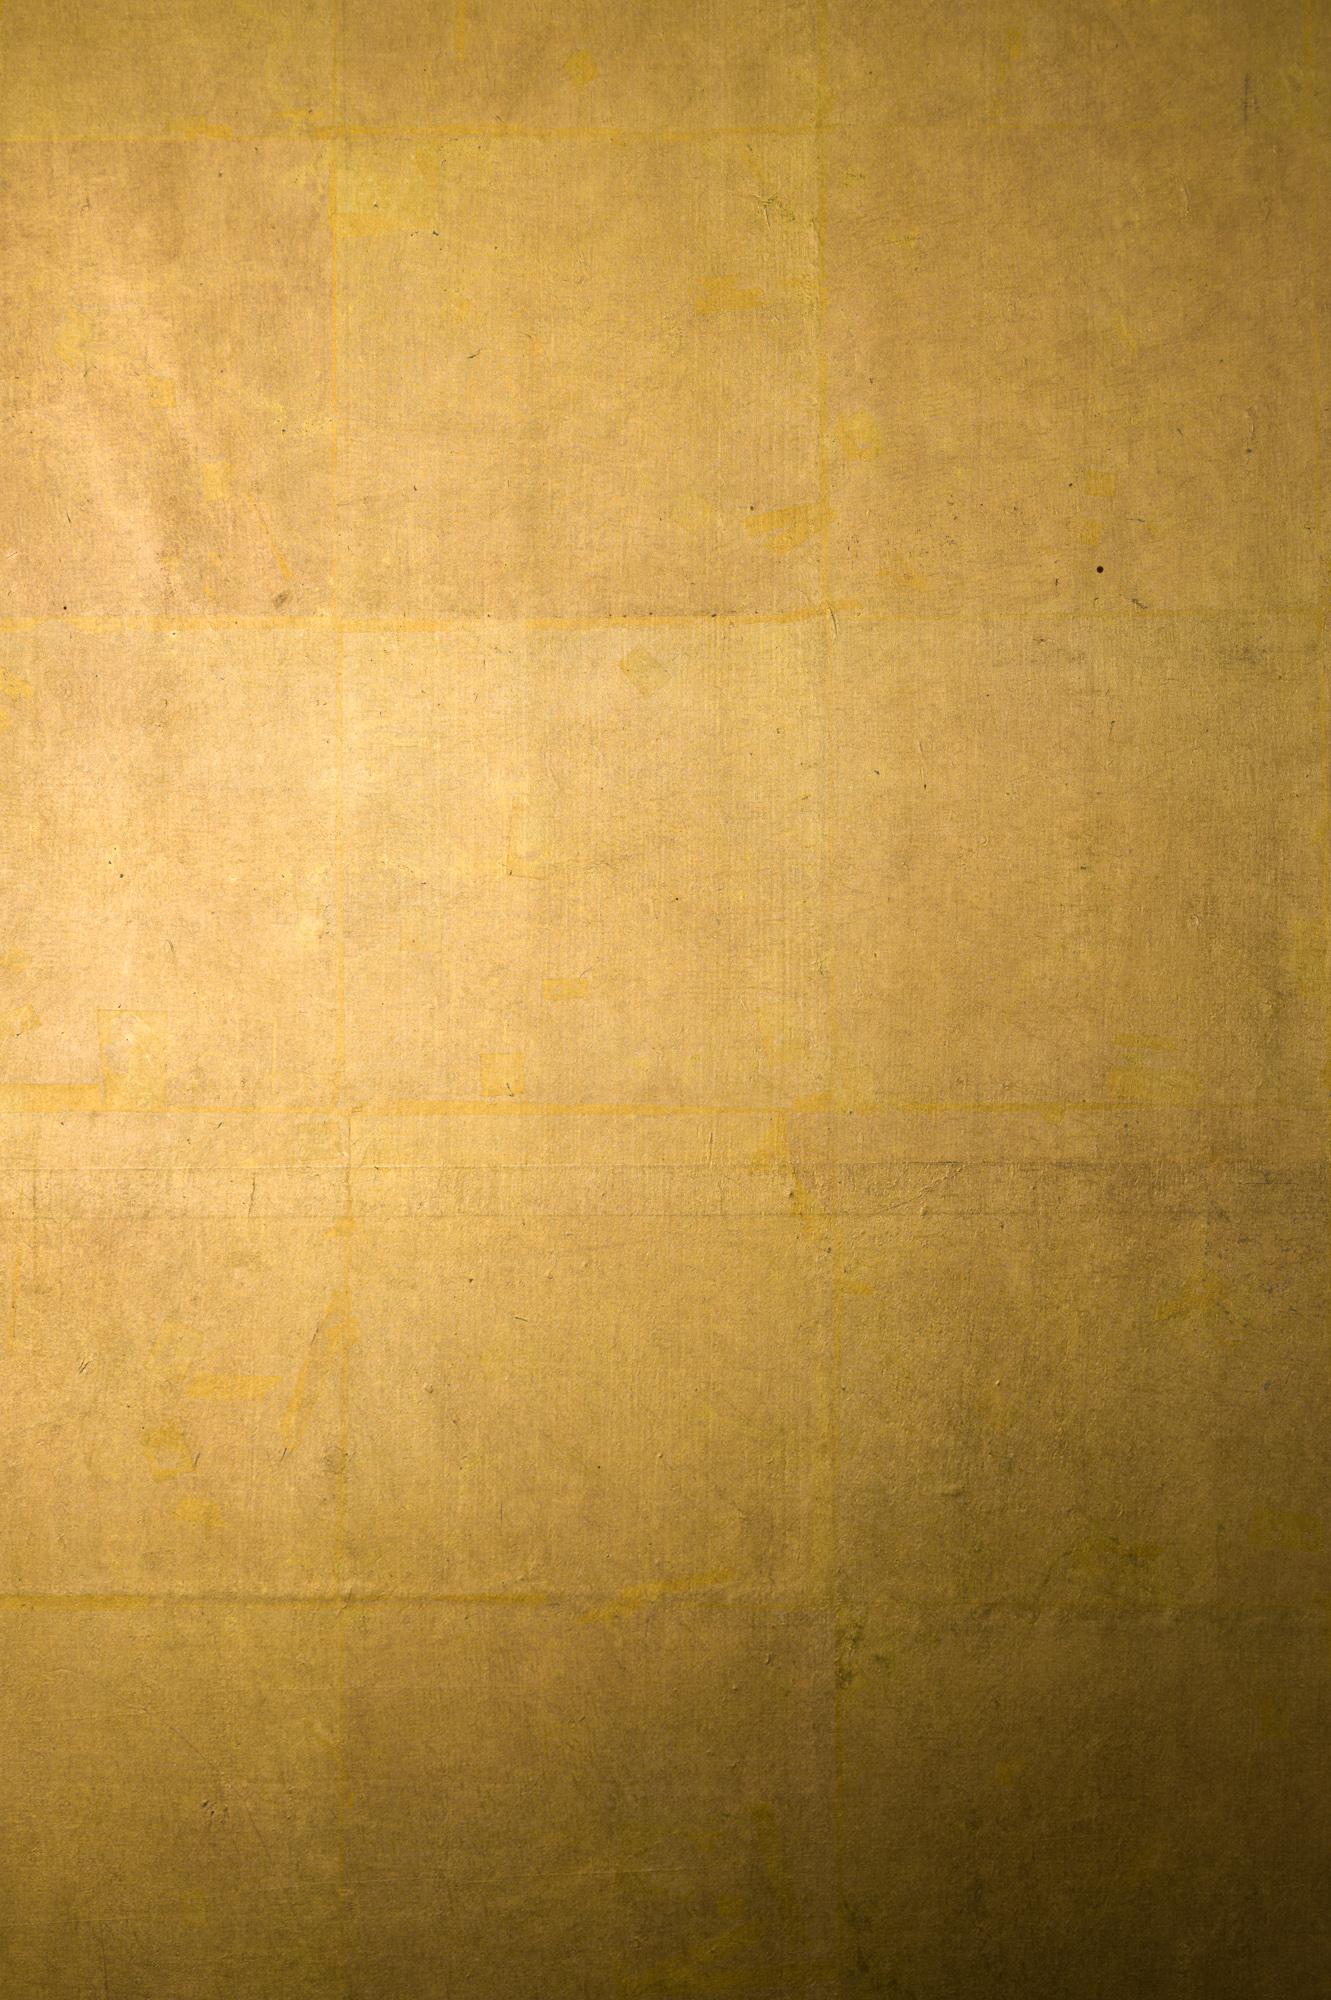 Japanese Six Panel Screen: Plain Gold Leaf, 'No Image' 1